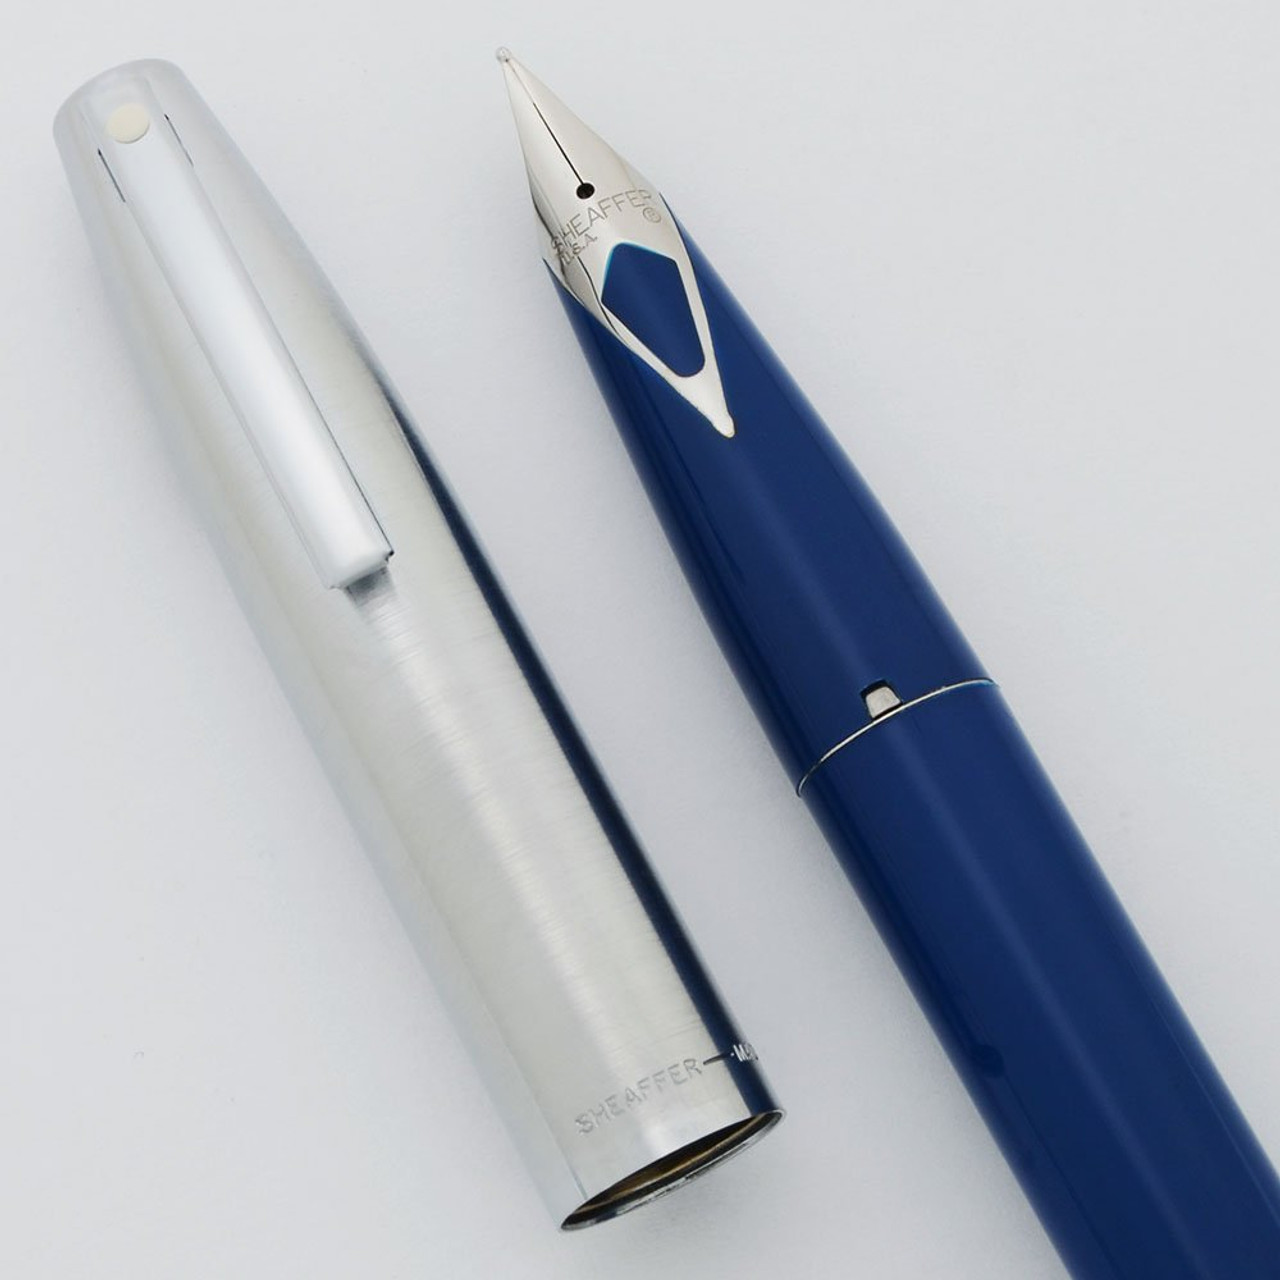 Sheaffer 440 (Quasi-Imperial) Fountain Pen - Short Diamond Inlay Nib (New  Old Stock) - Peyton Street Pens